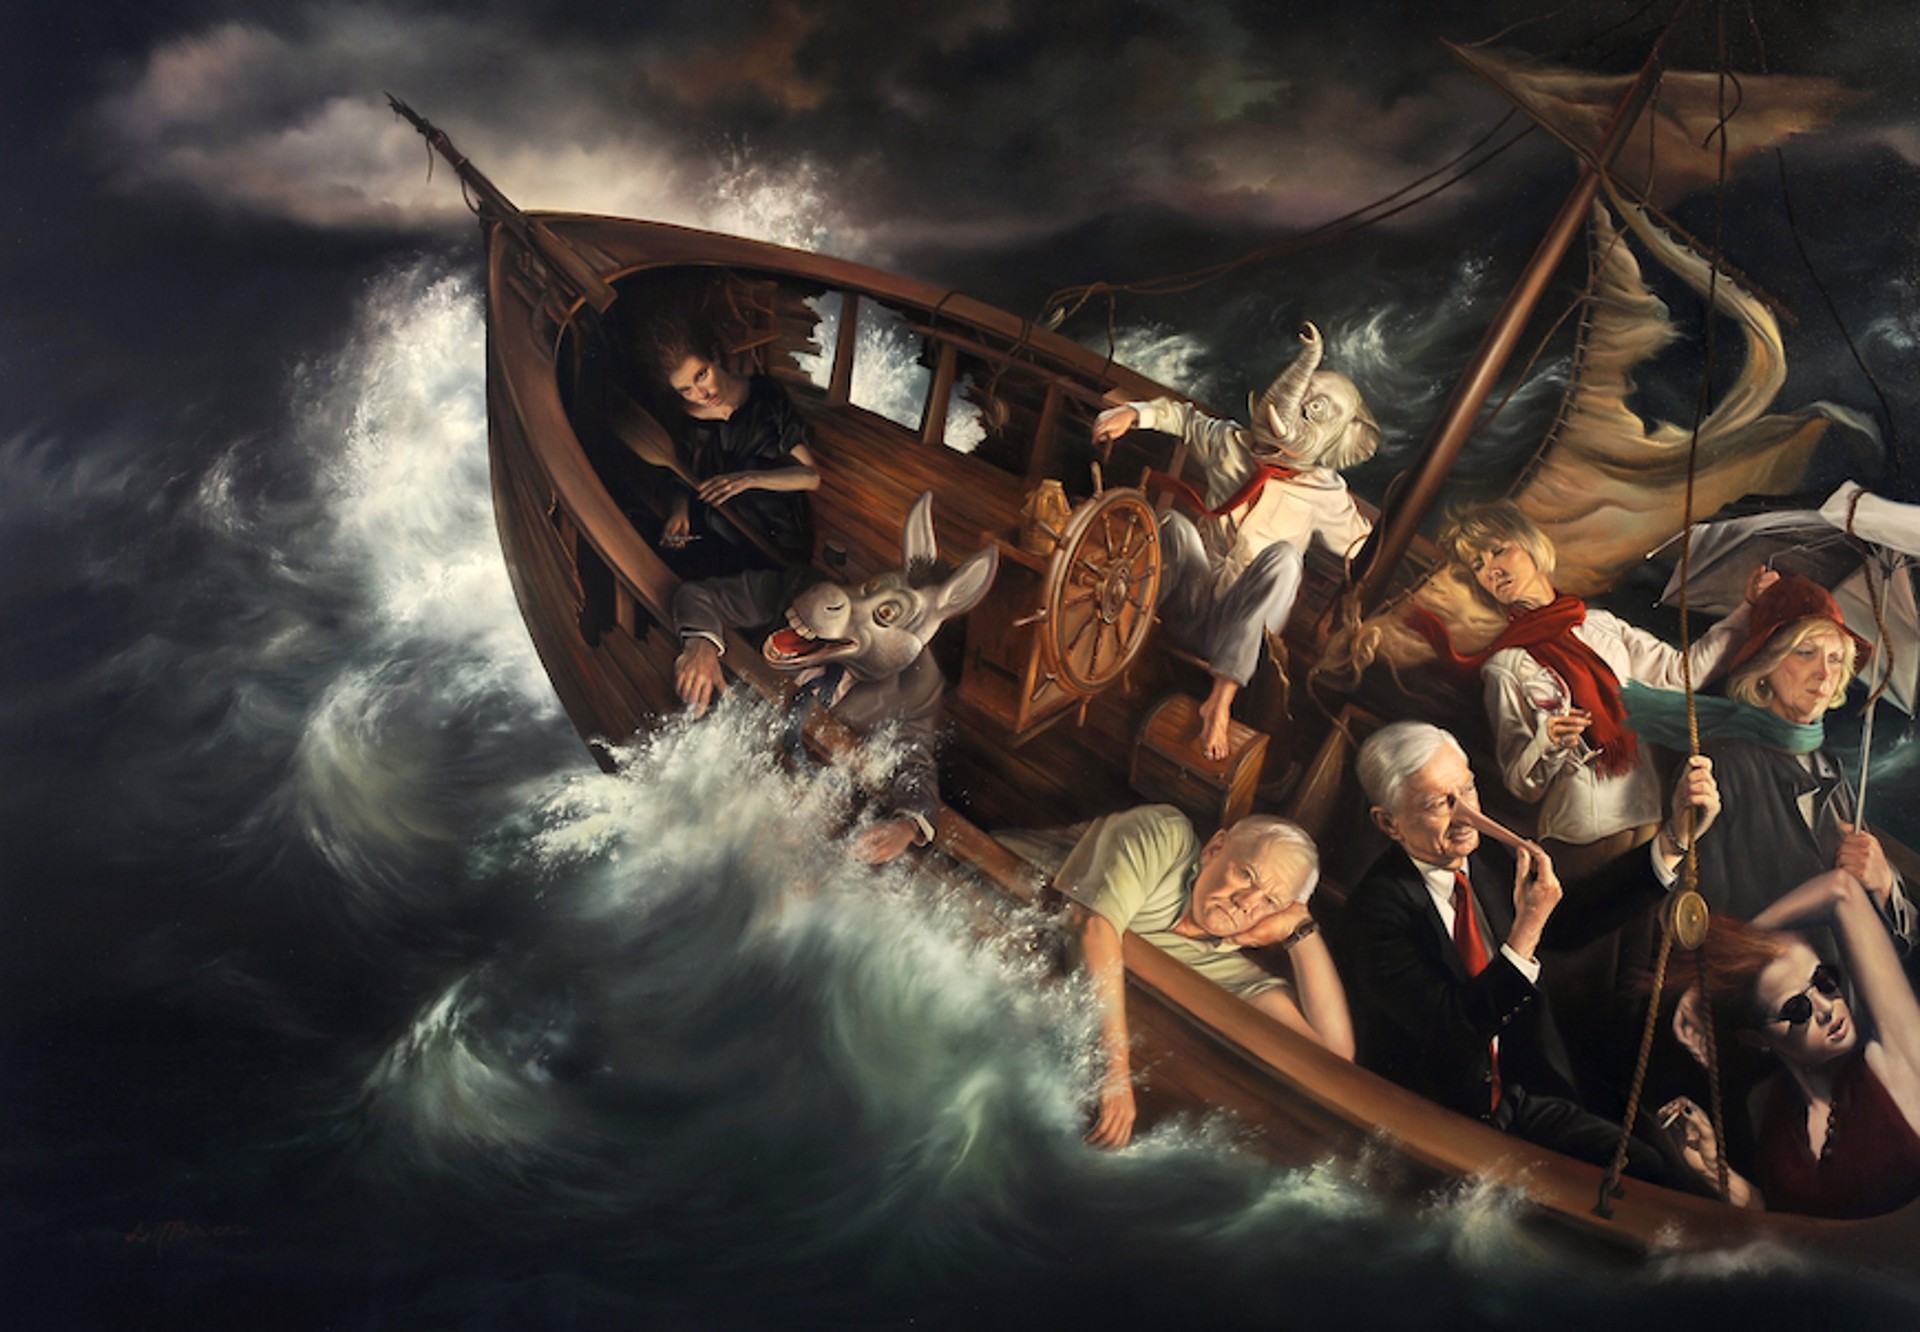 Ship of Fools by David Michael Bowers